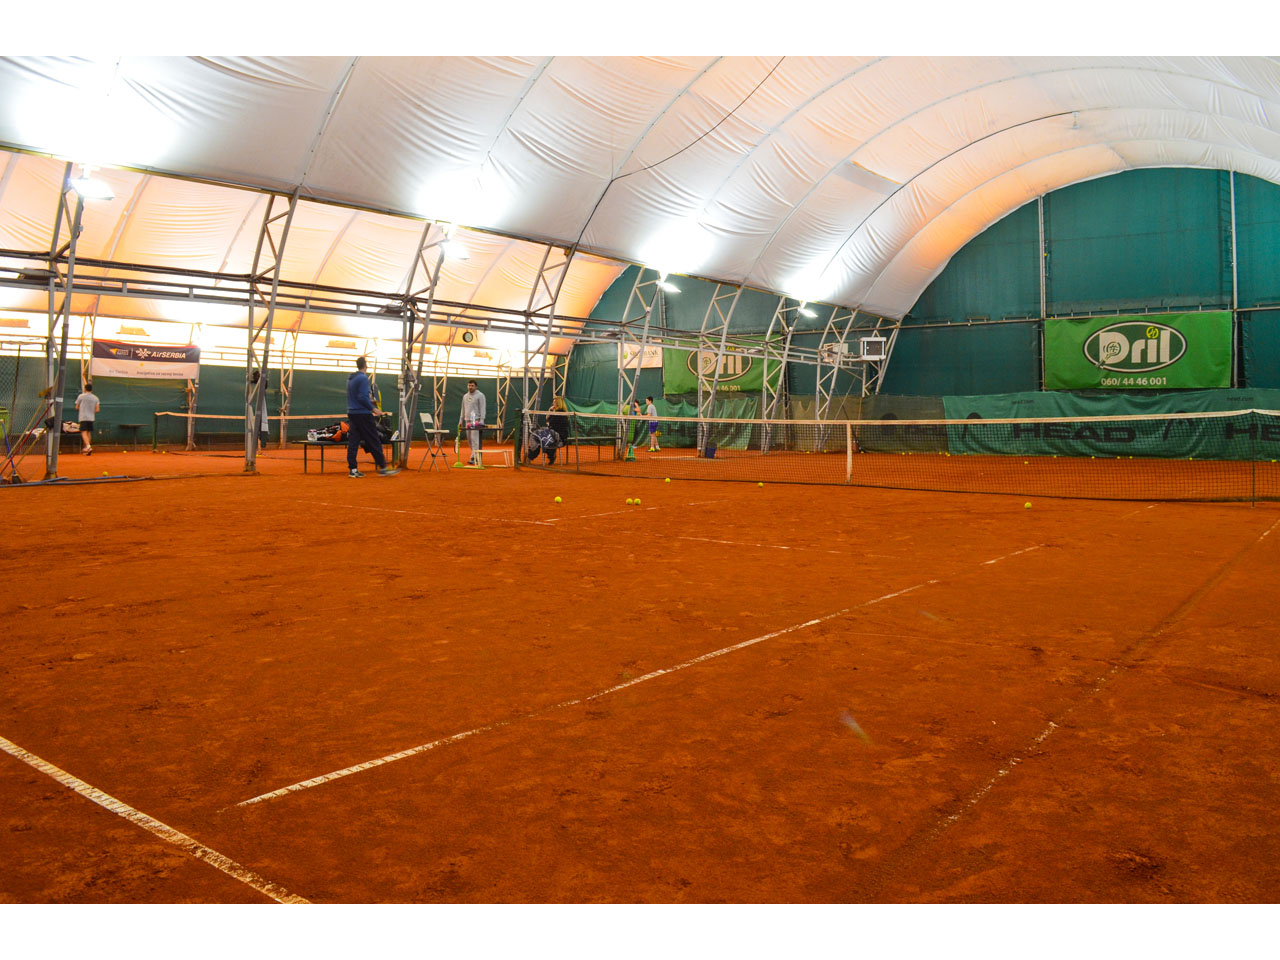 DRIL TENNIS CLUB Tennis courts, tennis schools, tennis clubs Belgrade - Photo 4